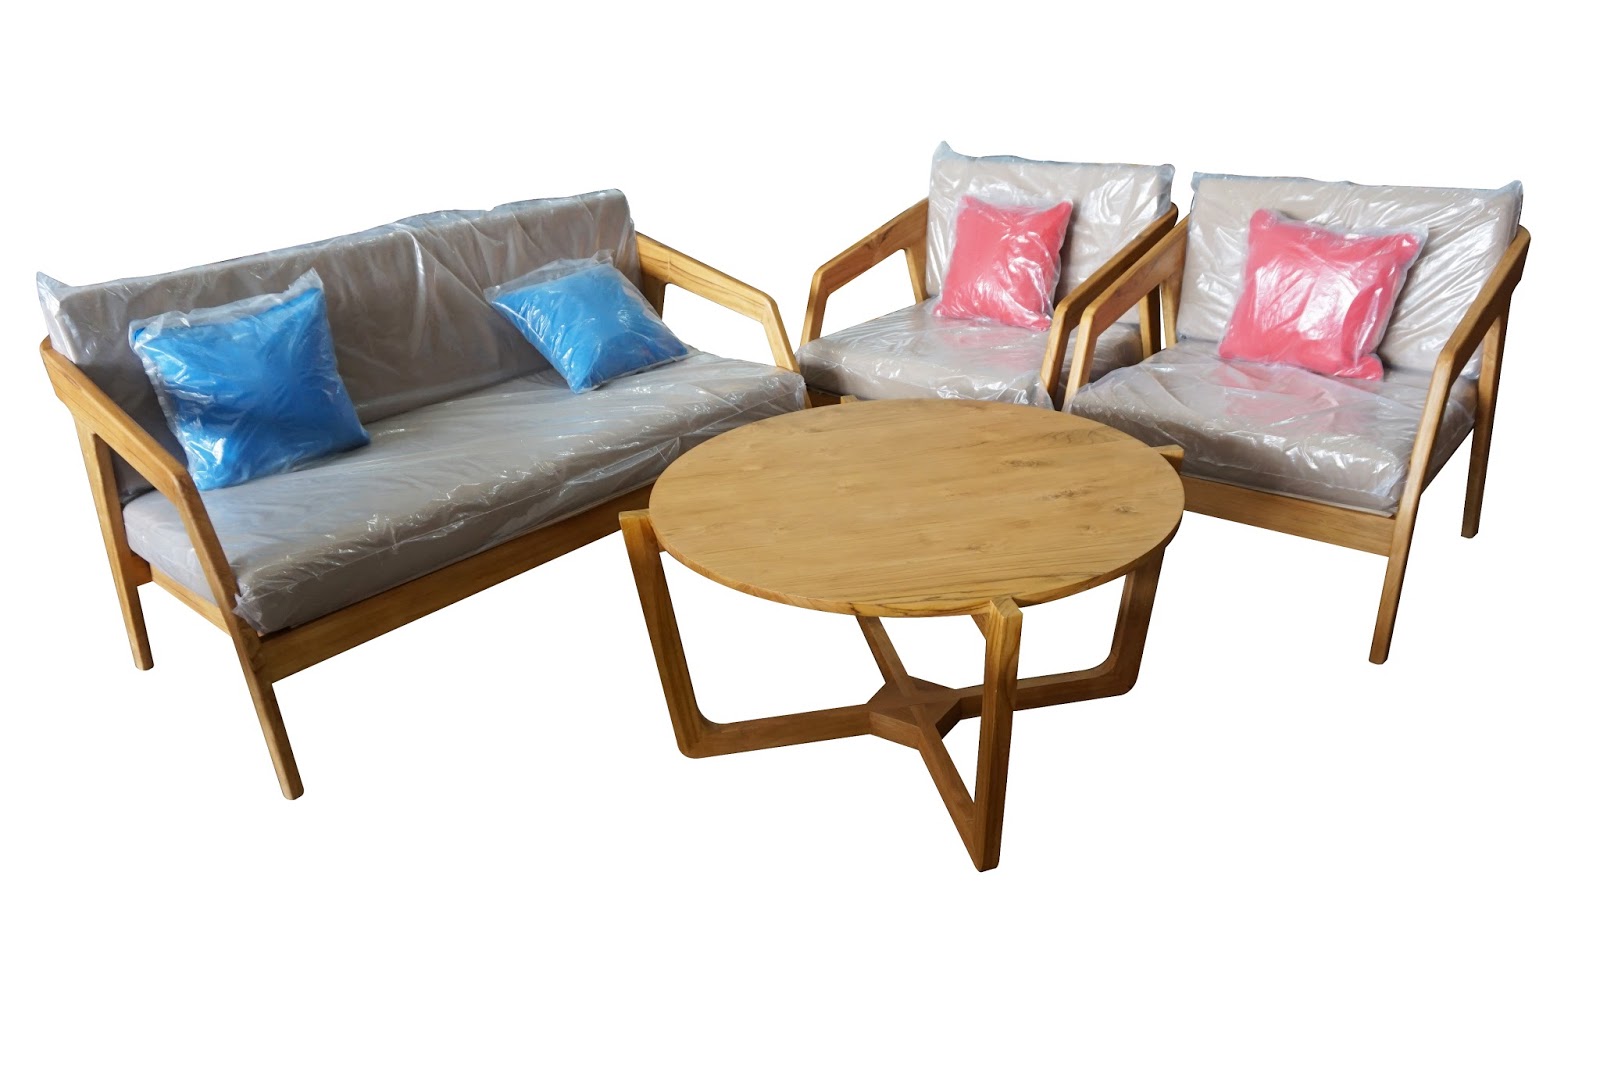 Teak Wood Furniture Malaysia And Outdoor Wicker Garden Furniture